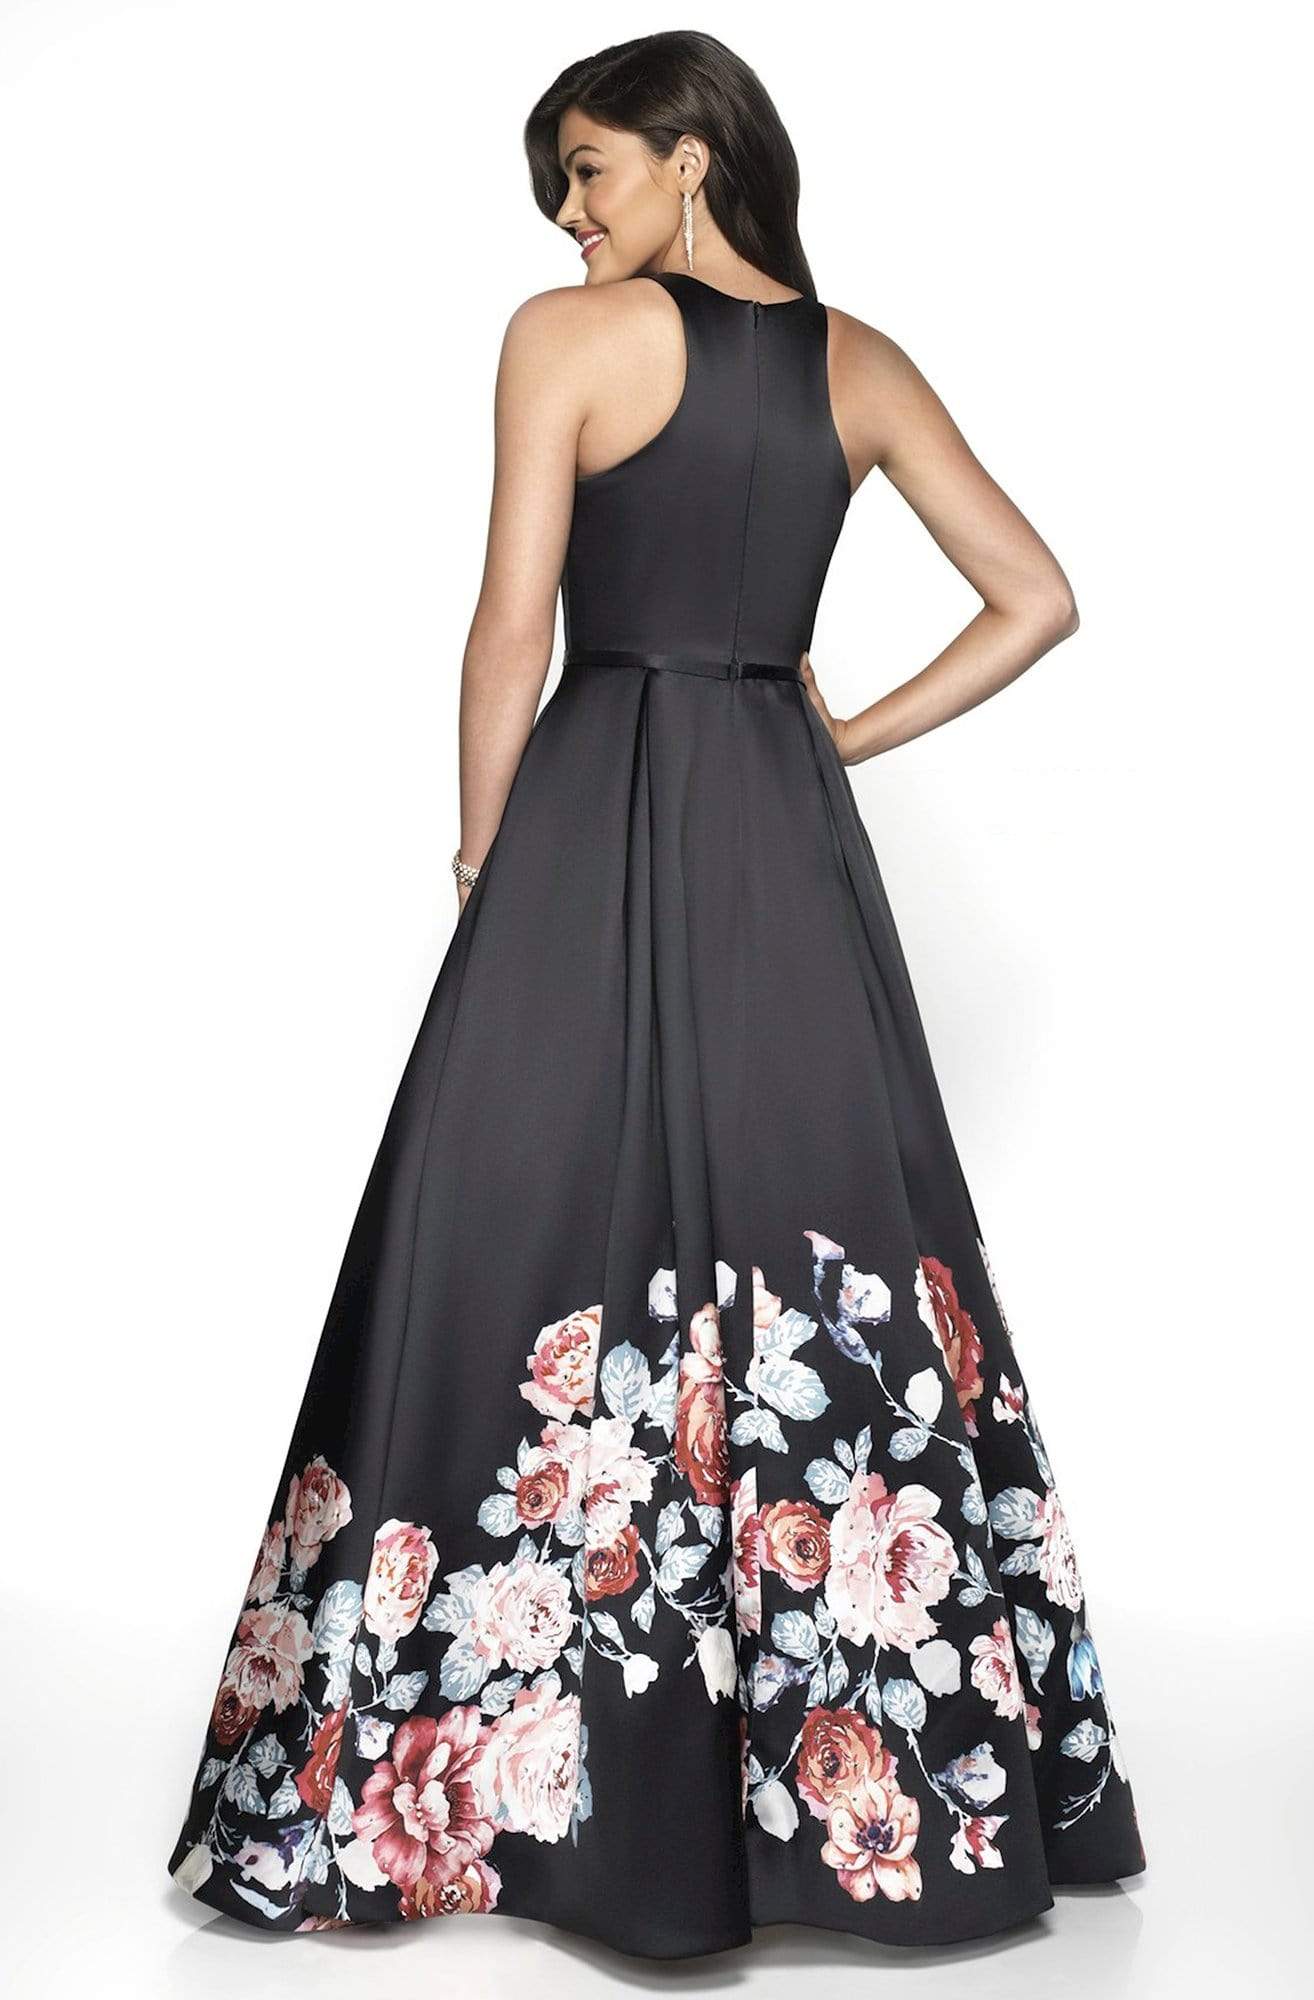 Blush by Alexia Designs - 11136Z Floral Print Mikado Ballgown Special Occasion Dress